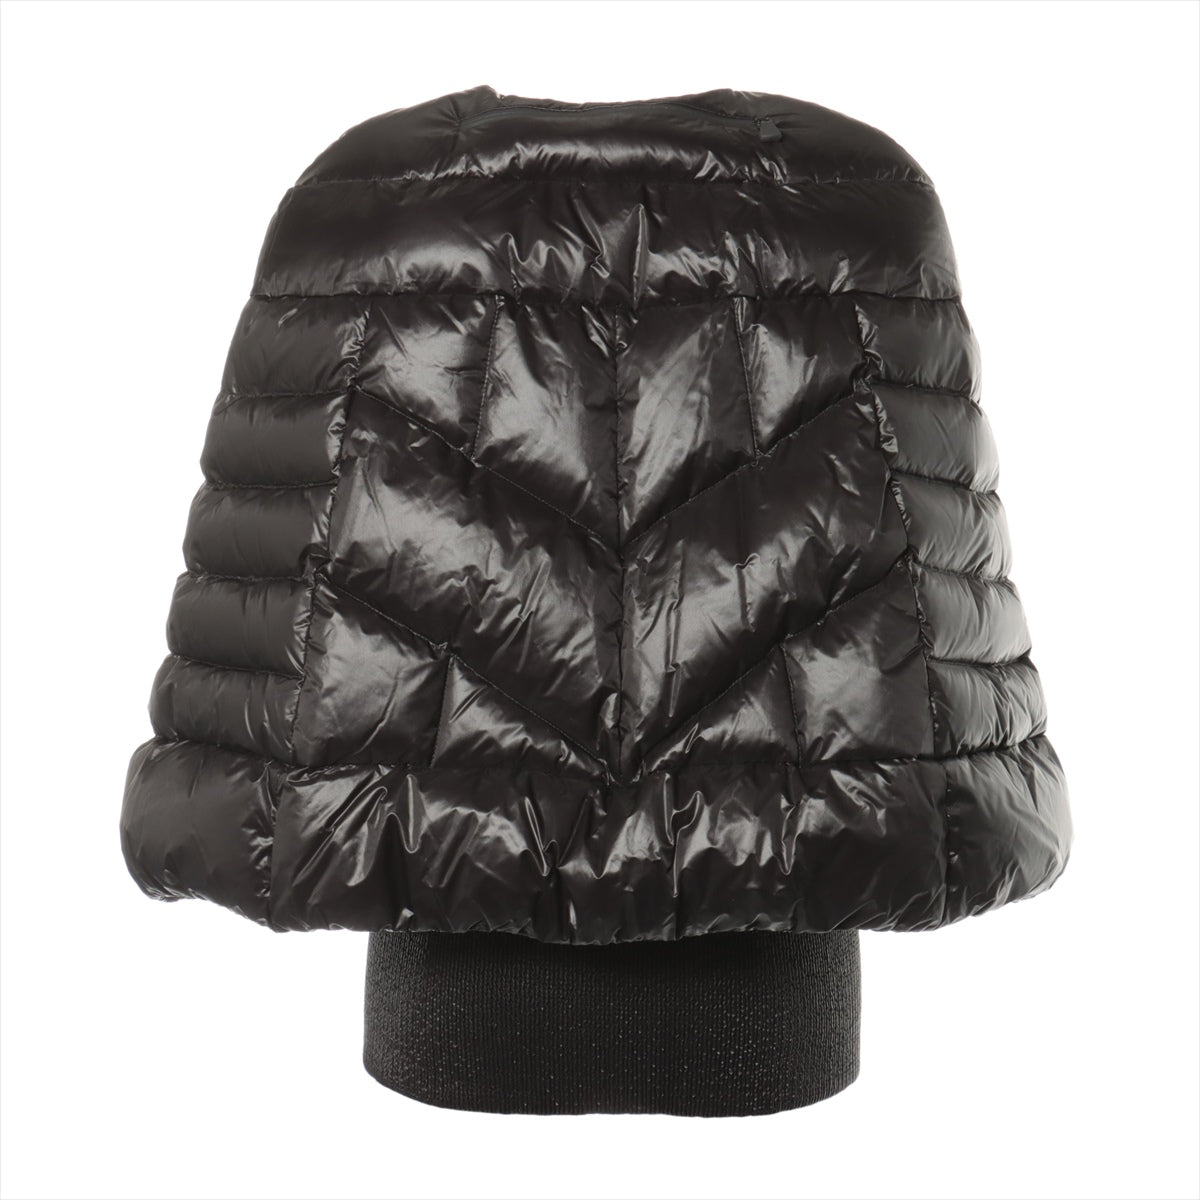 Moncler Grenoble 10 years Nylon Down jacket 1 Ladies' Black  SOELDEN Poncho